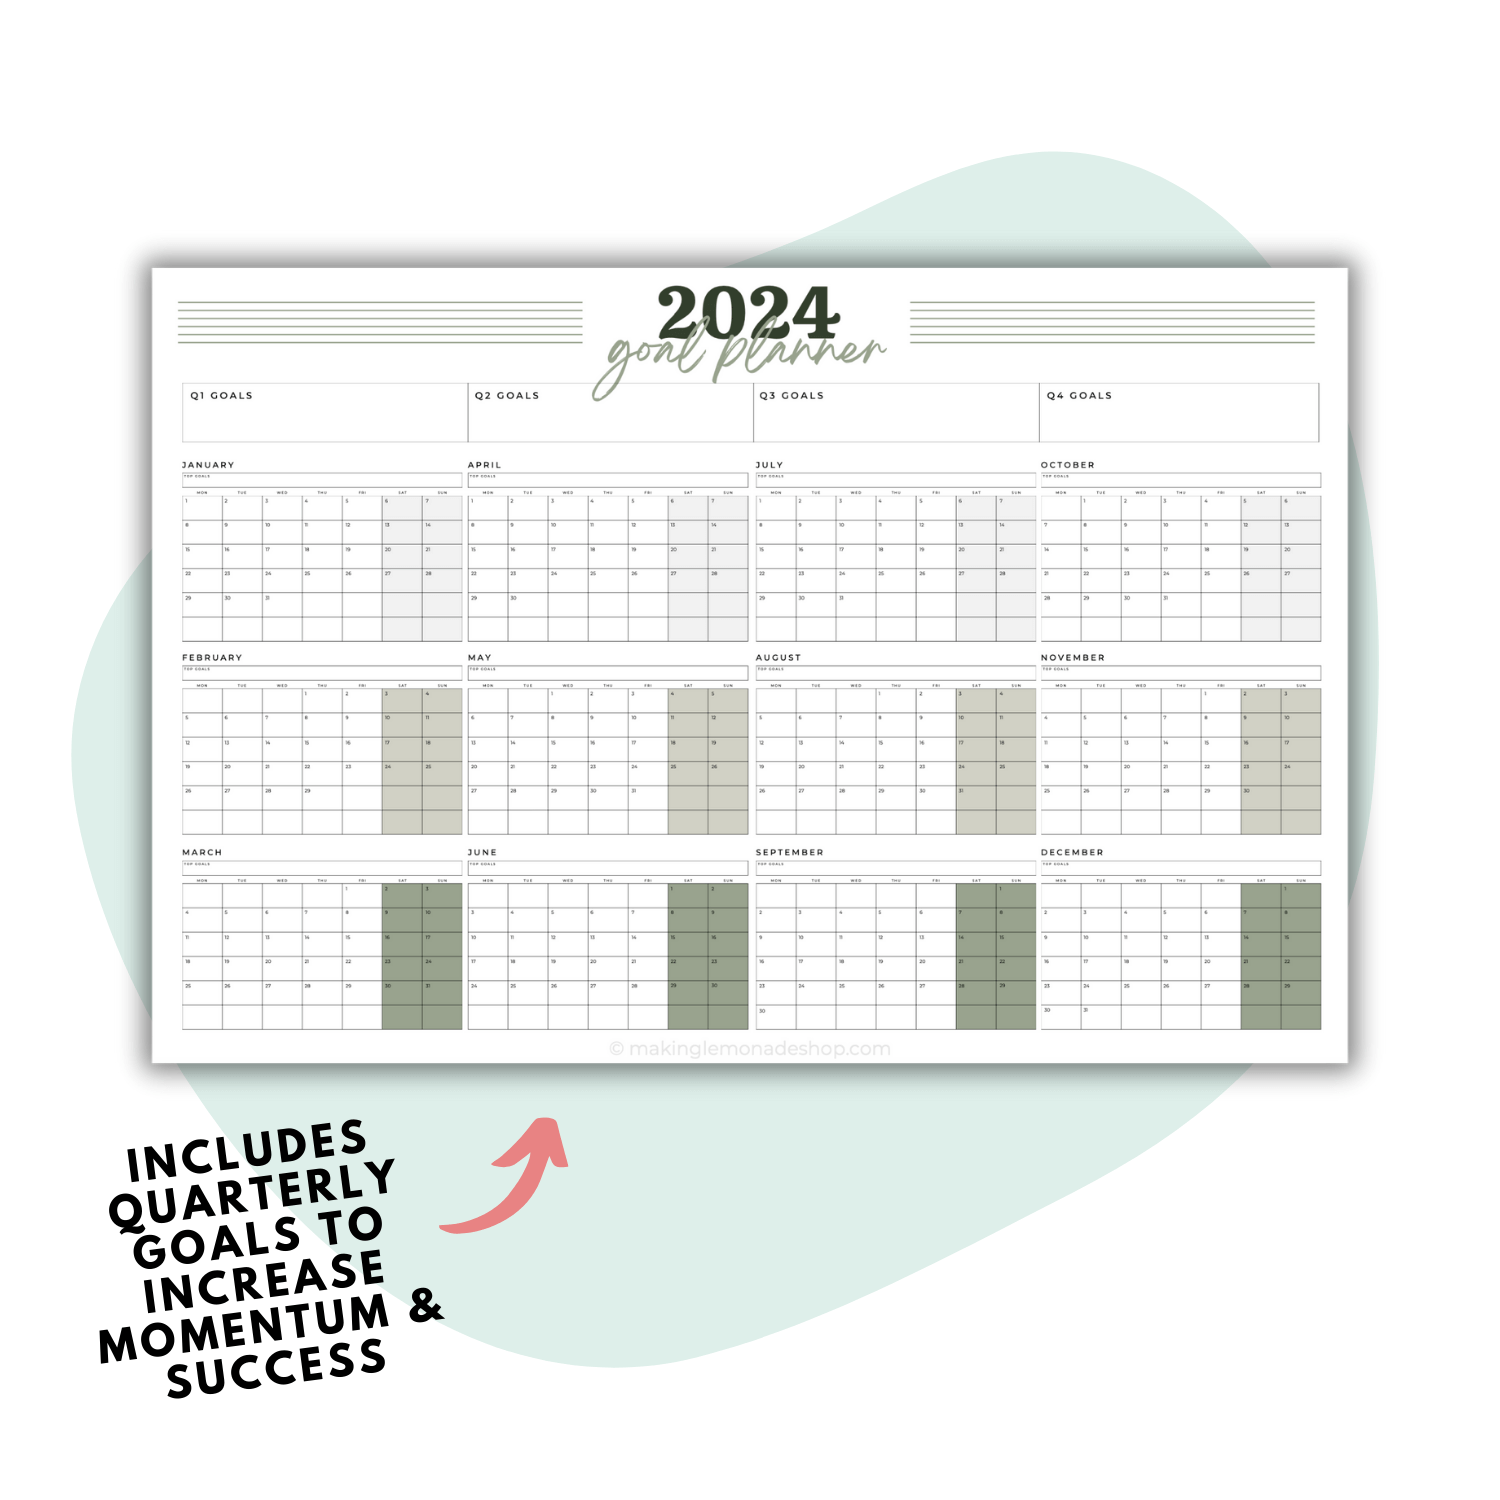 2024 large print wall calendar goal planner